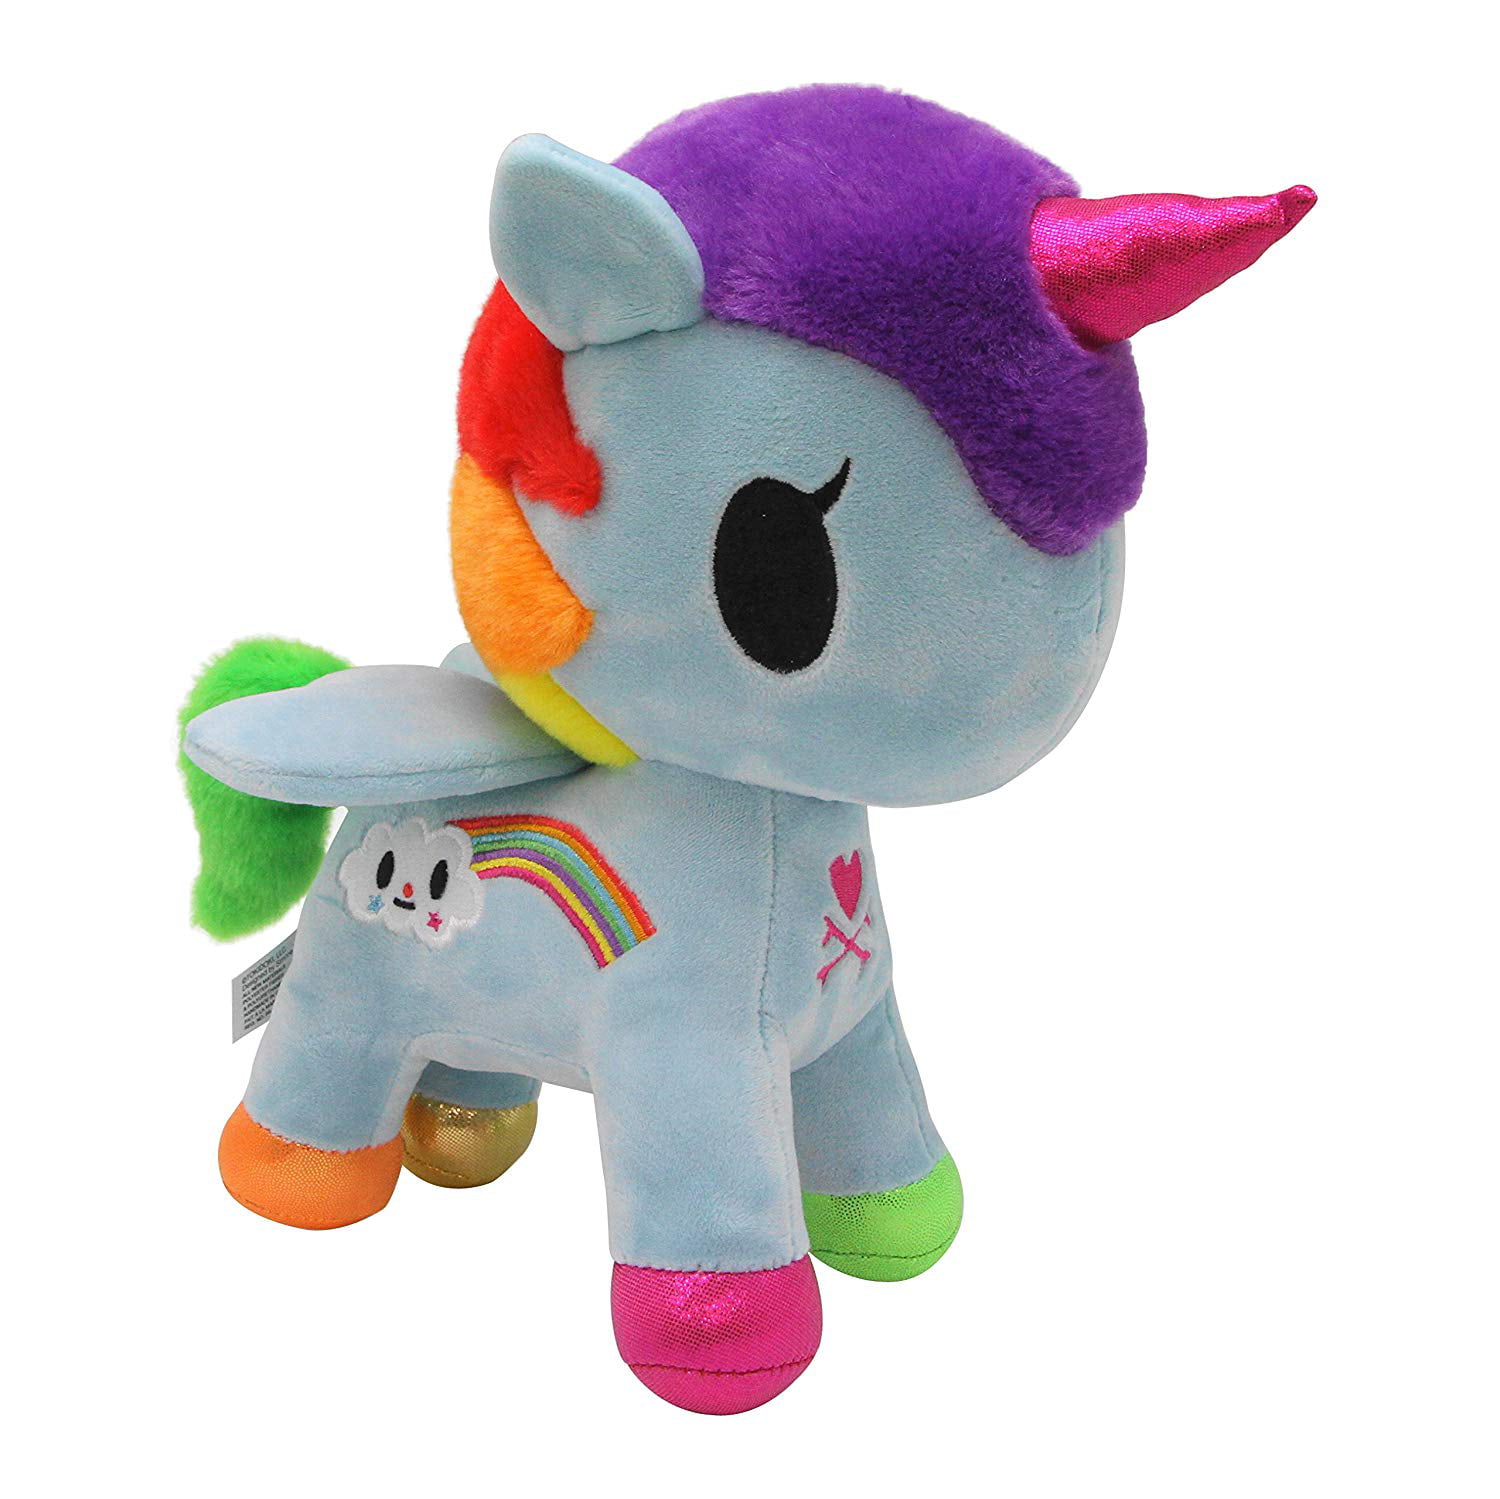 Deluxe Large tokidoki Aurora 20" Pixie Unicorno Plush Stuffed Animal Kids Gift 